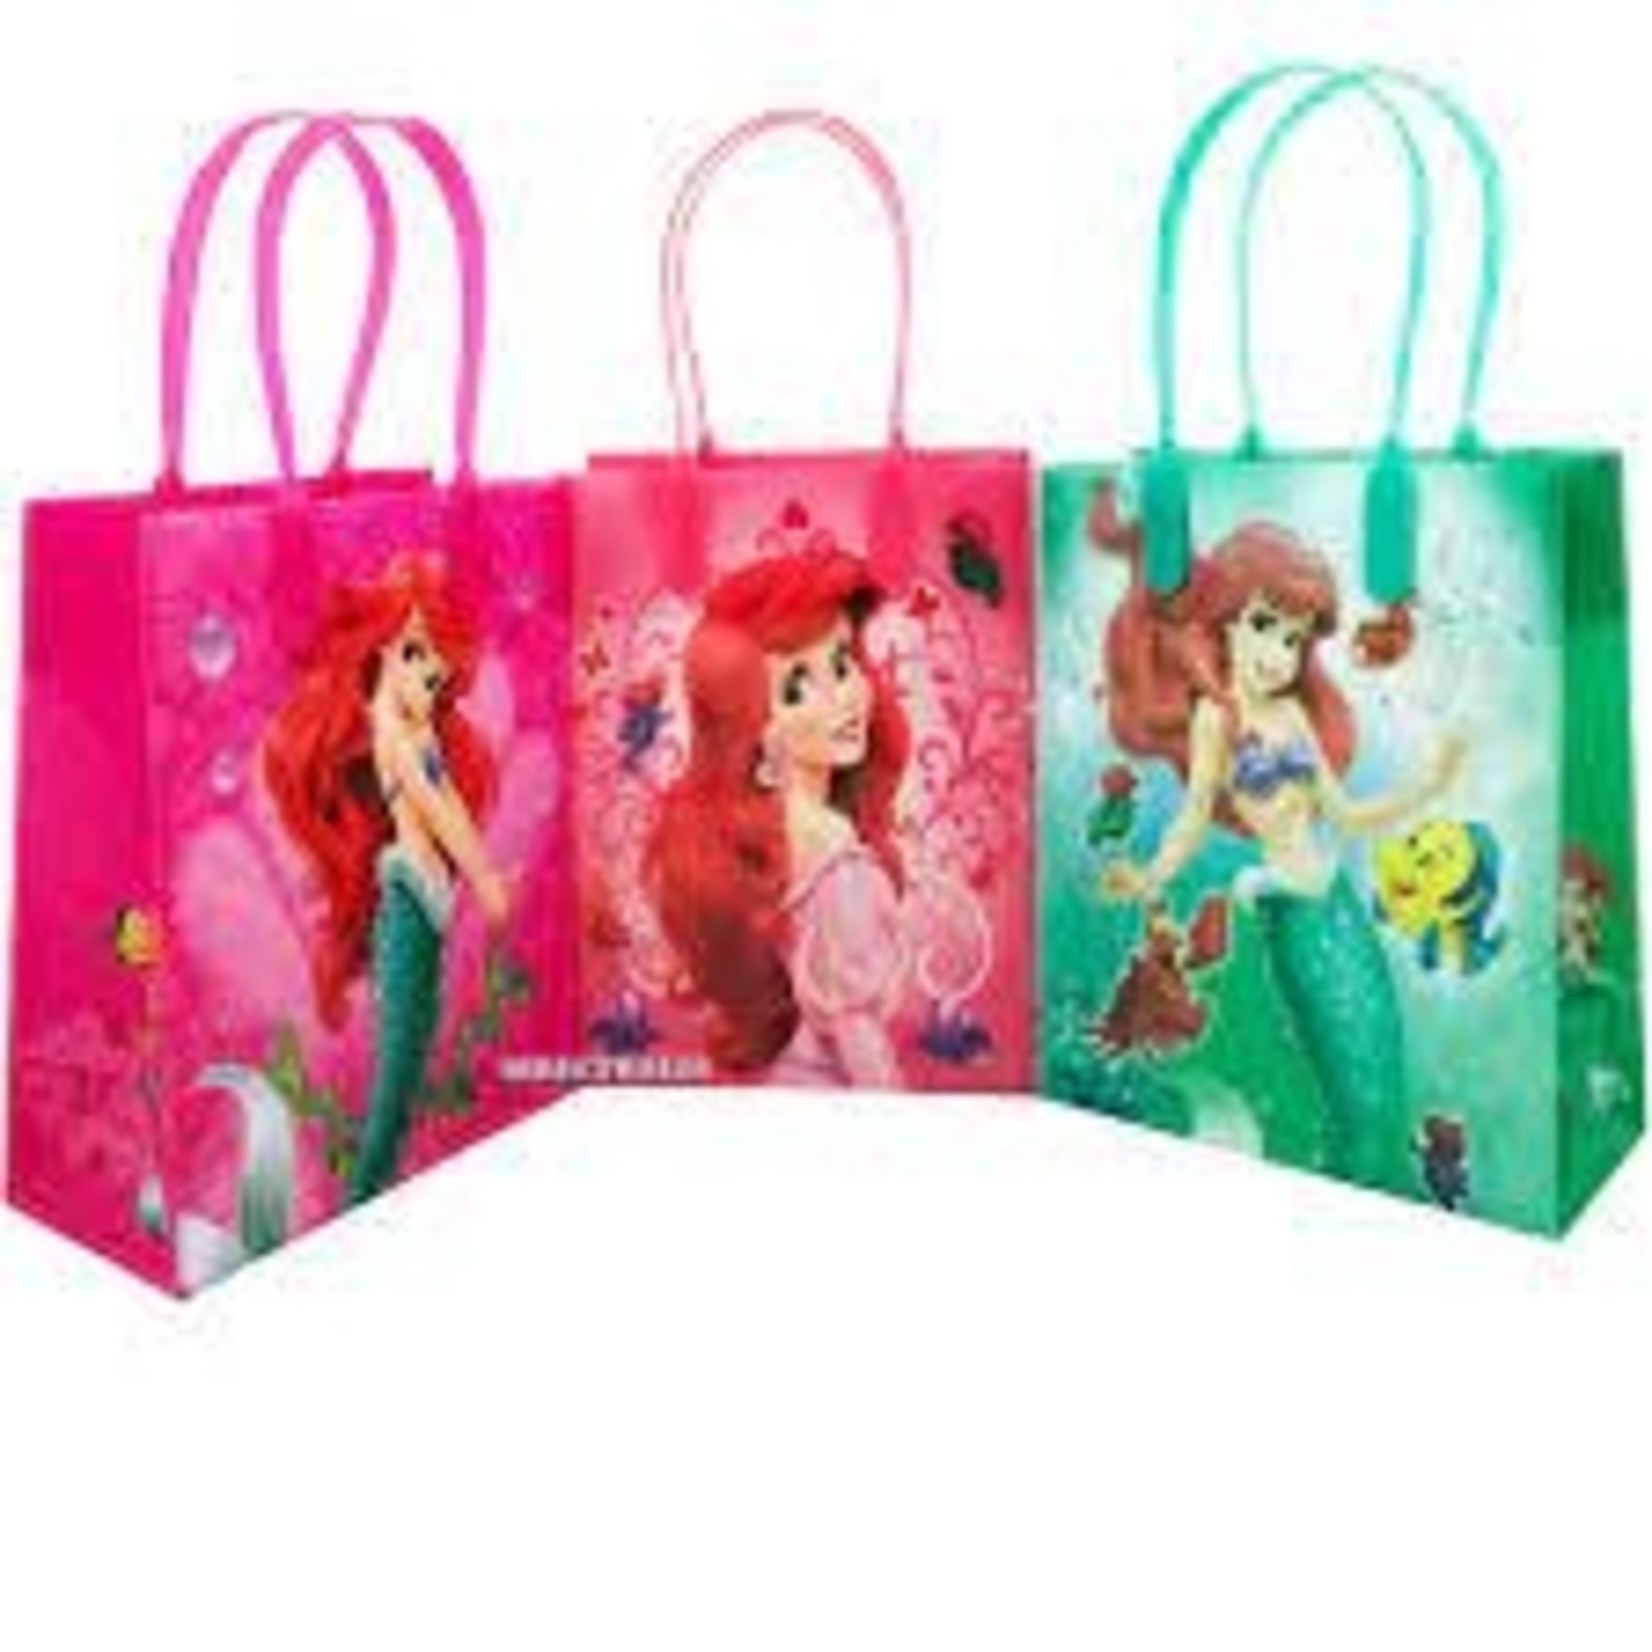 The Little Mermaid Plastic Treat Bags 12pcs